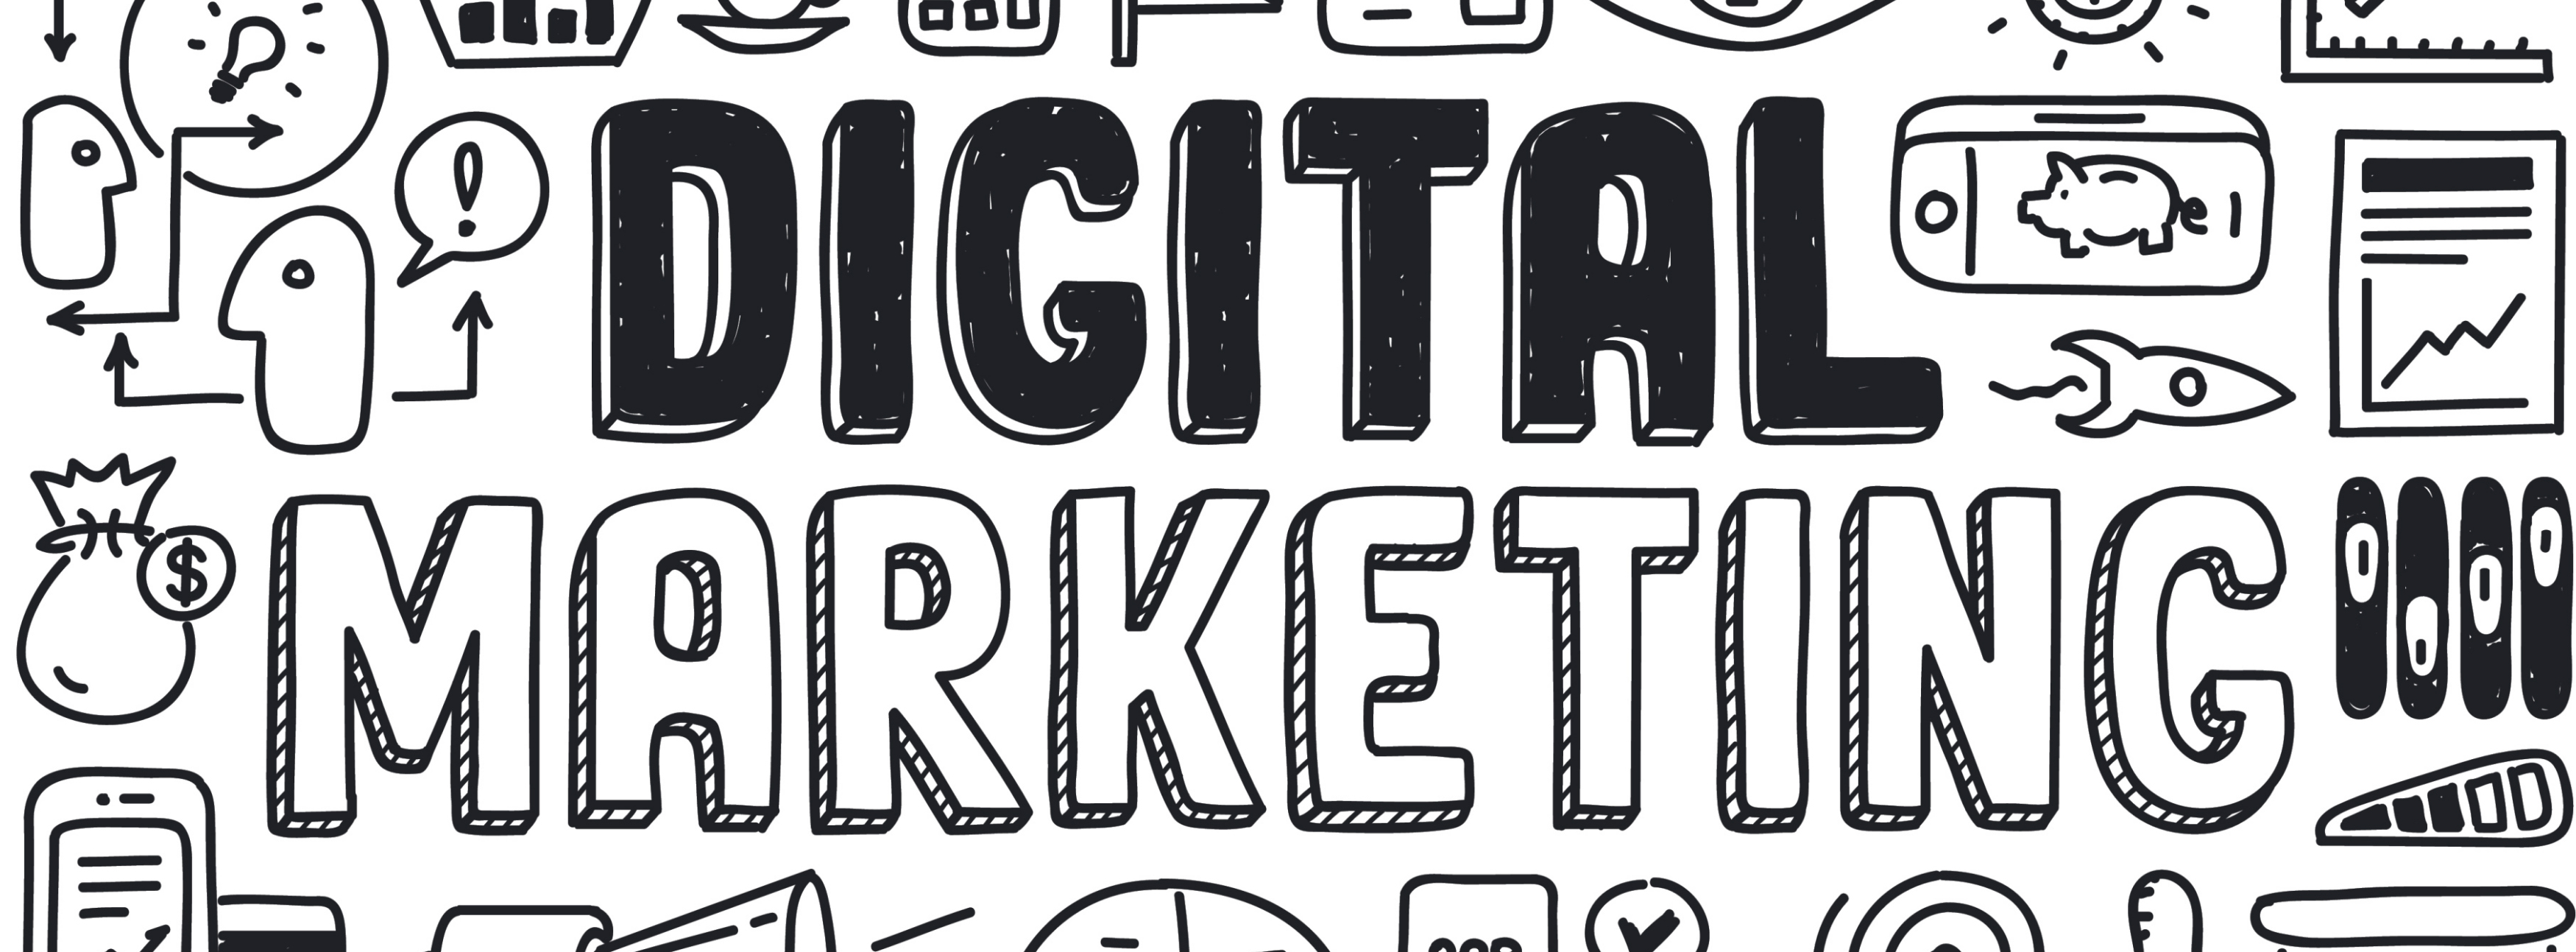 5 Logo Design Tips from Digital Marketing Pros - Scott Le Roy Marketing